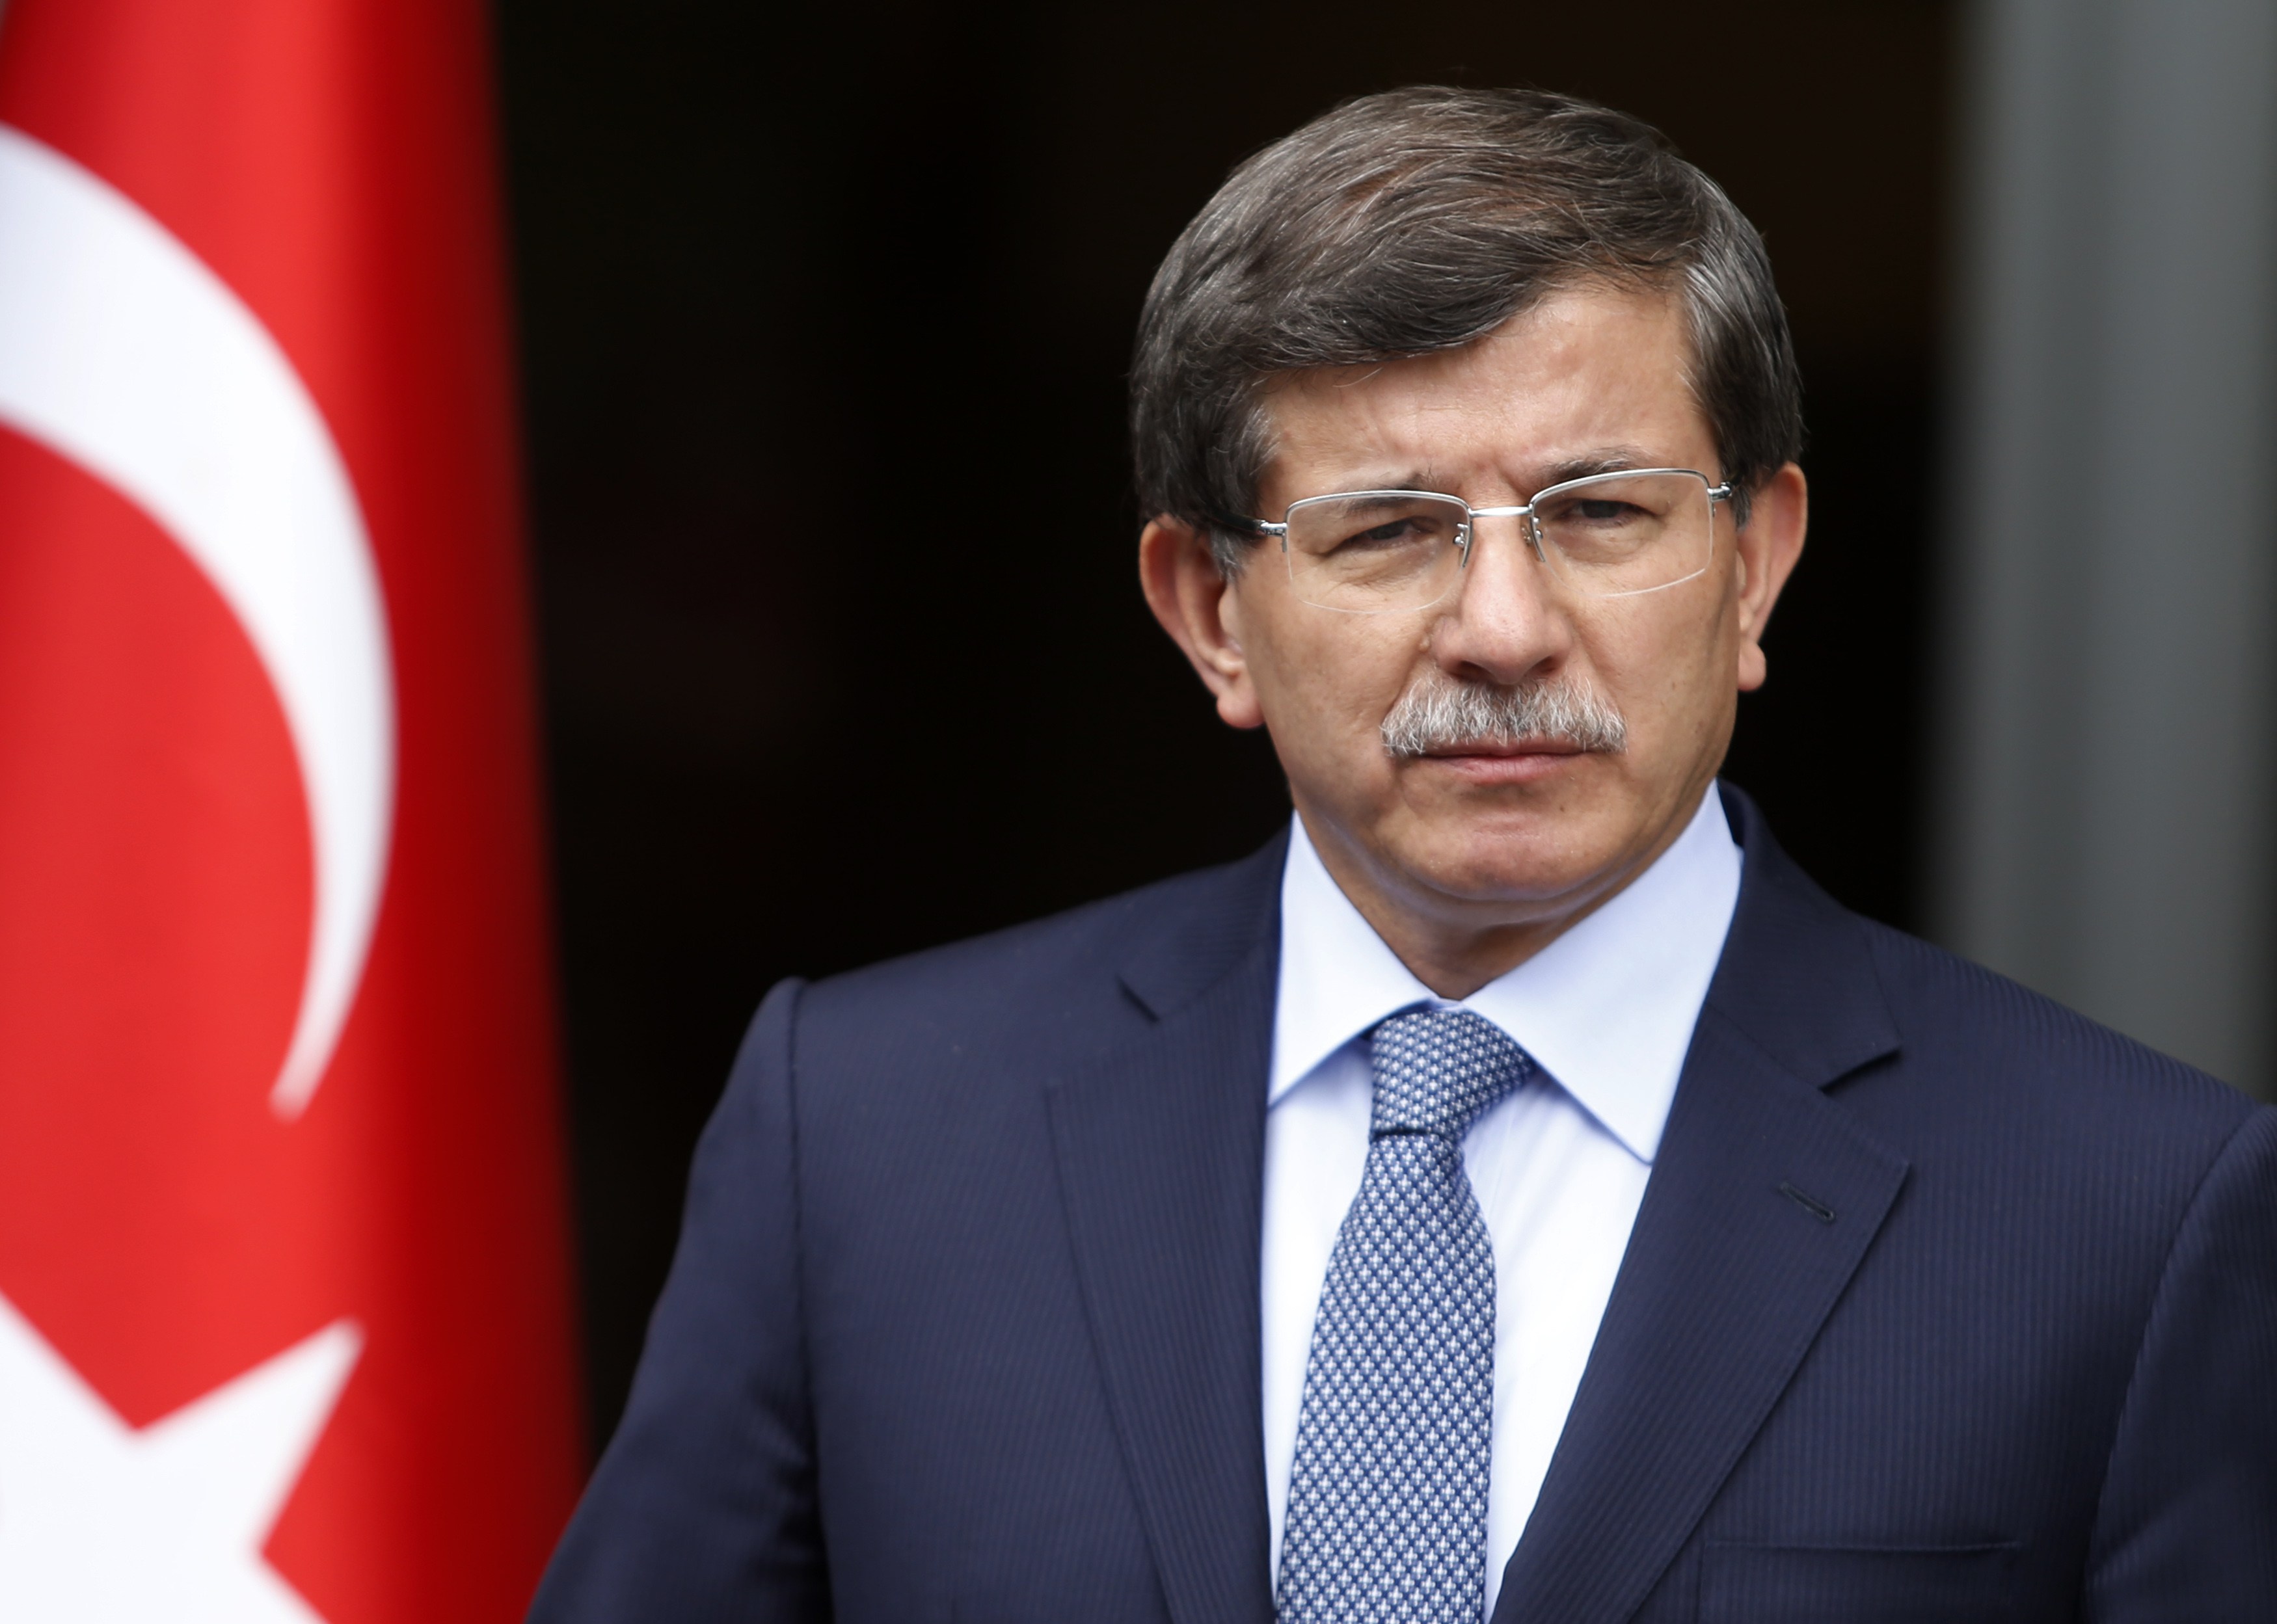 PM TURKI SEBUT KLAIM RUSIA “KEBOHONGAN SOVIET”